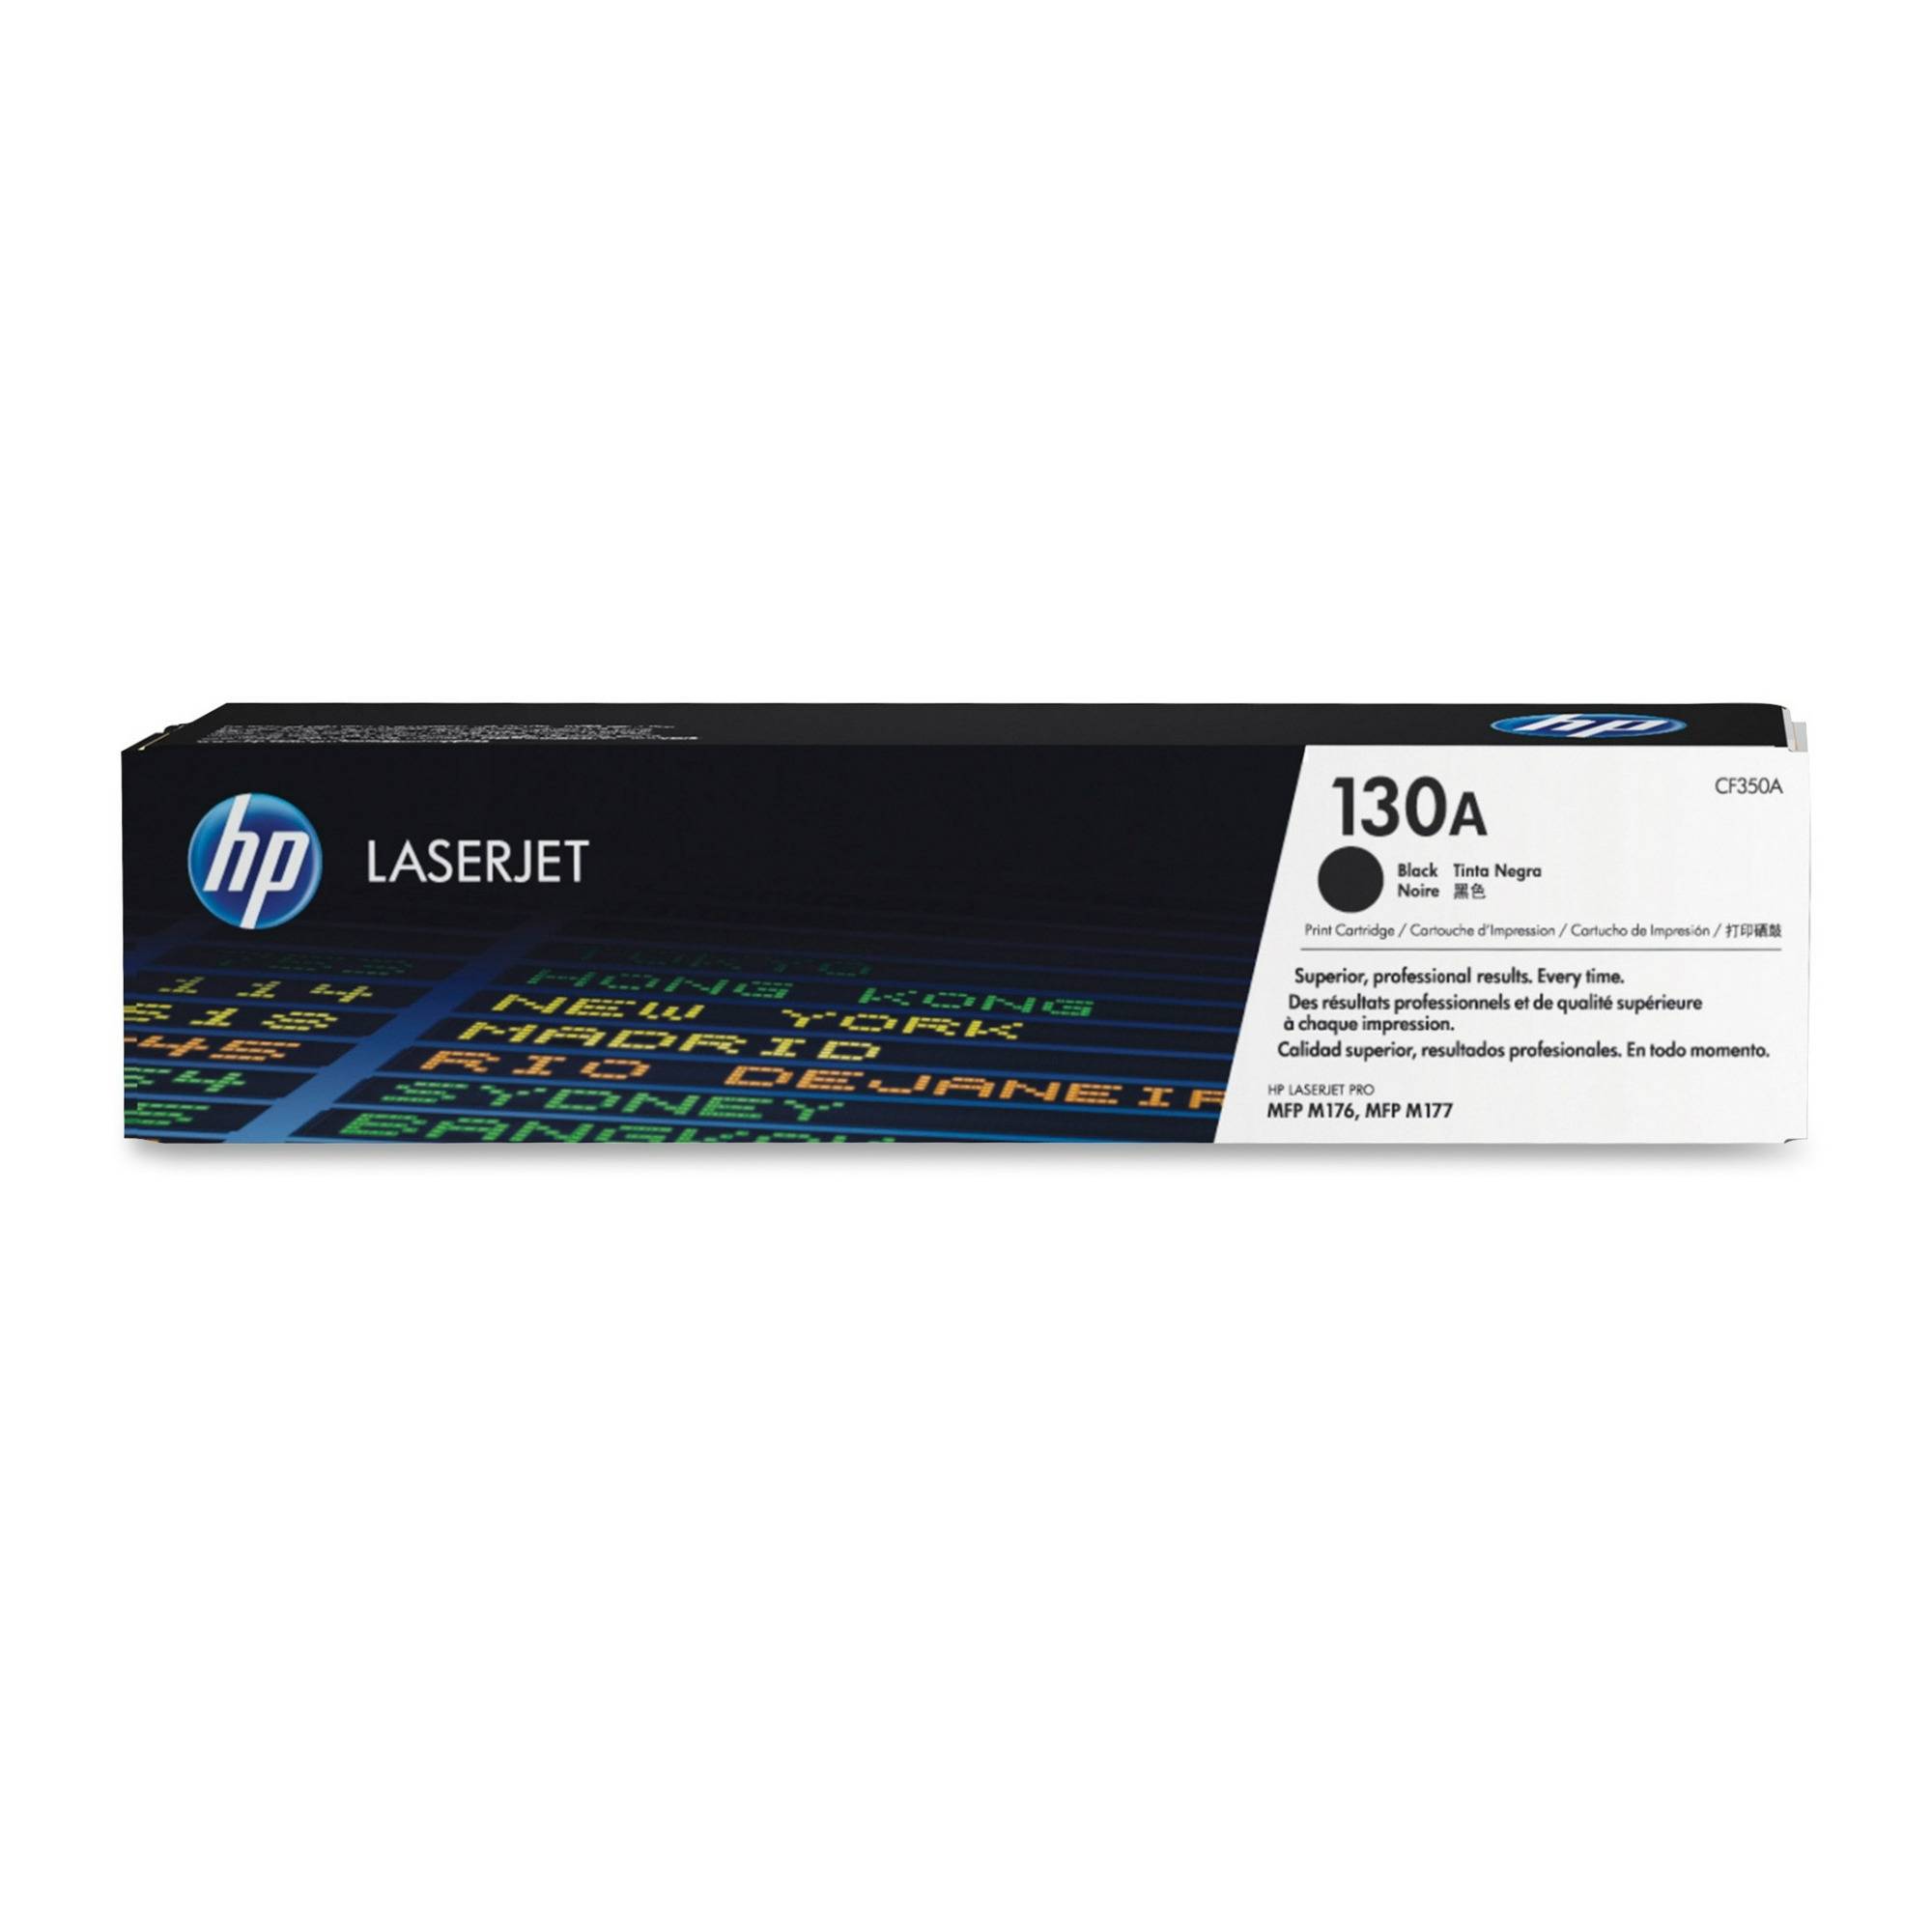 HP 130A Black Original LaserJet Toner Cartridge for Professional Quality Results (1300 Pages)